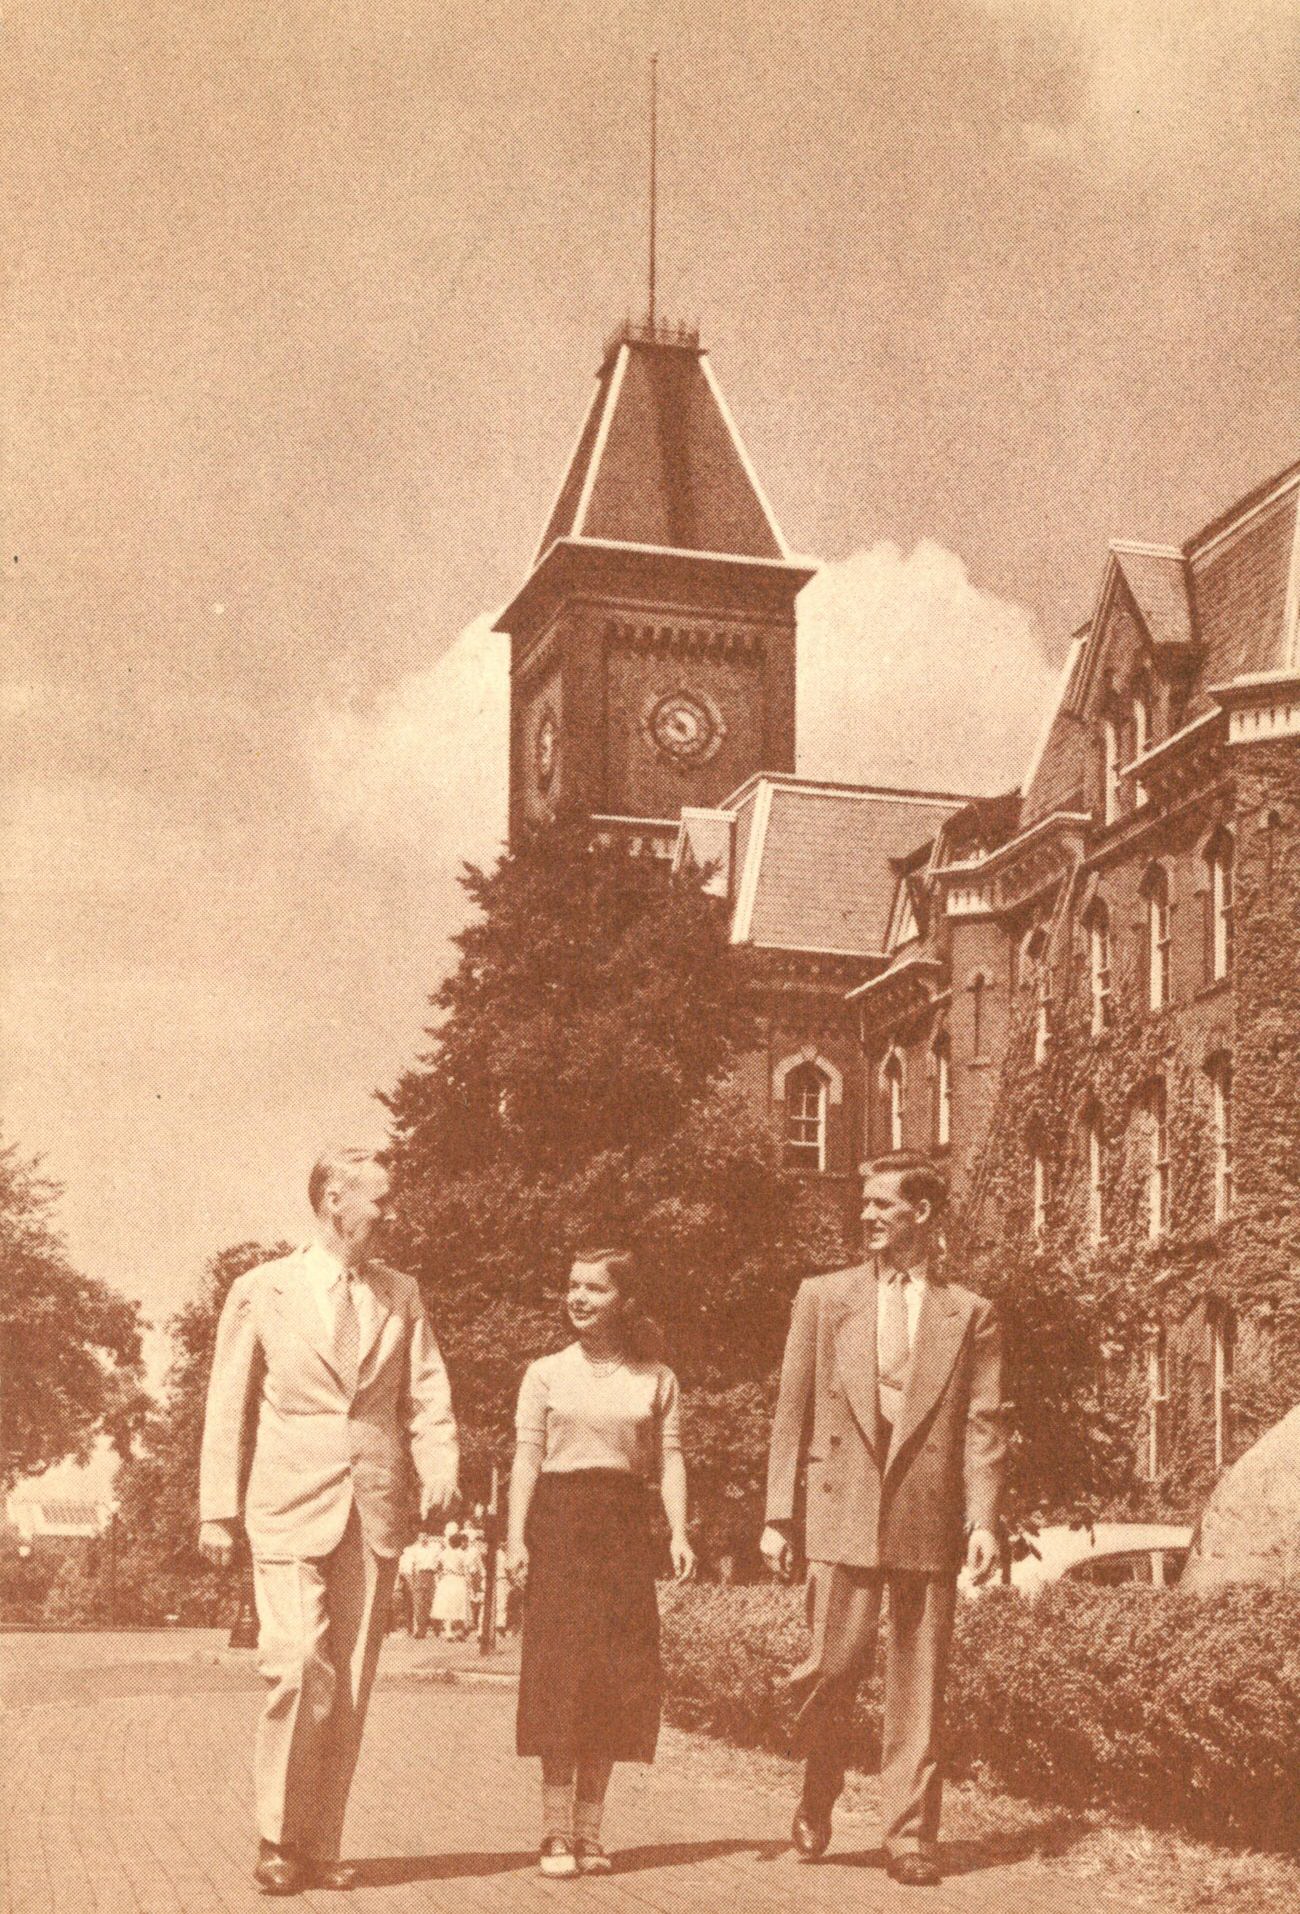 University Hall at The Ohio State University, Columbus, 1940s